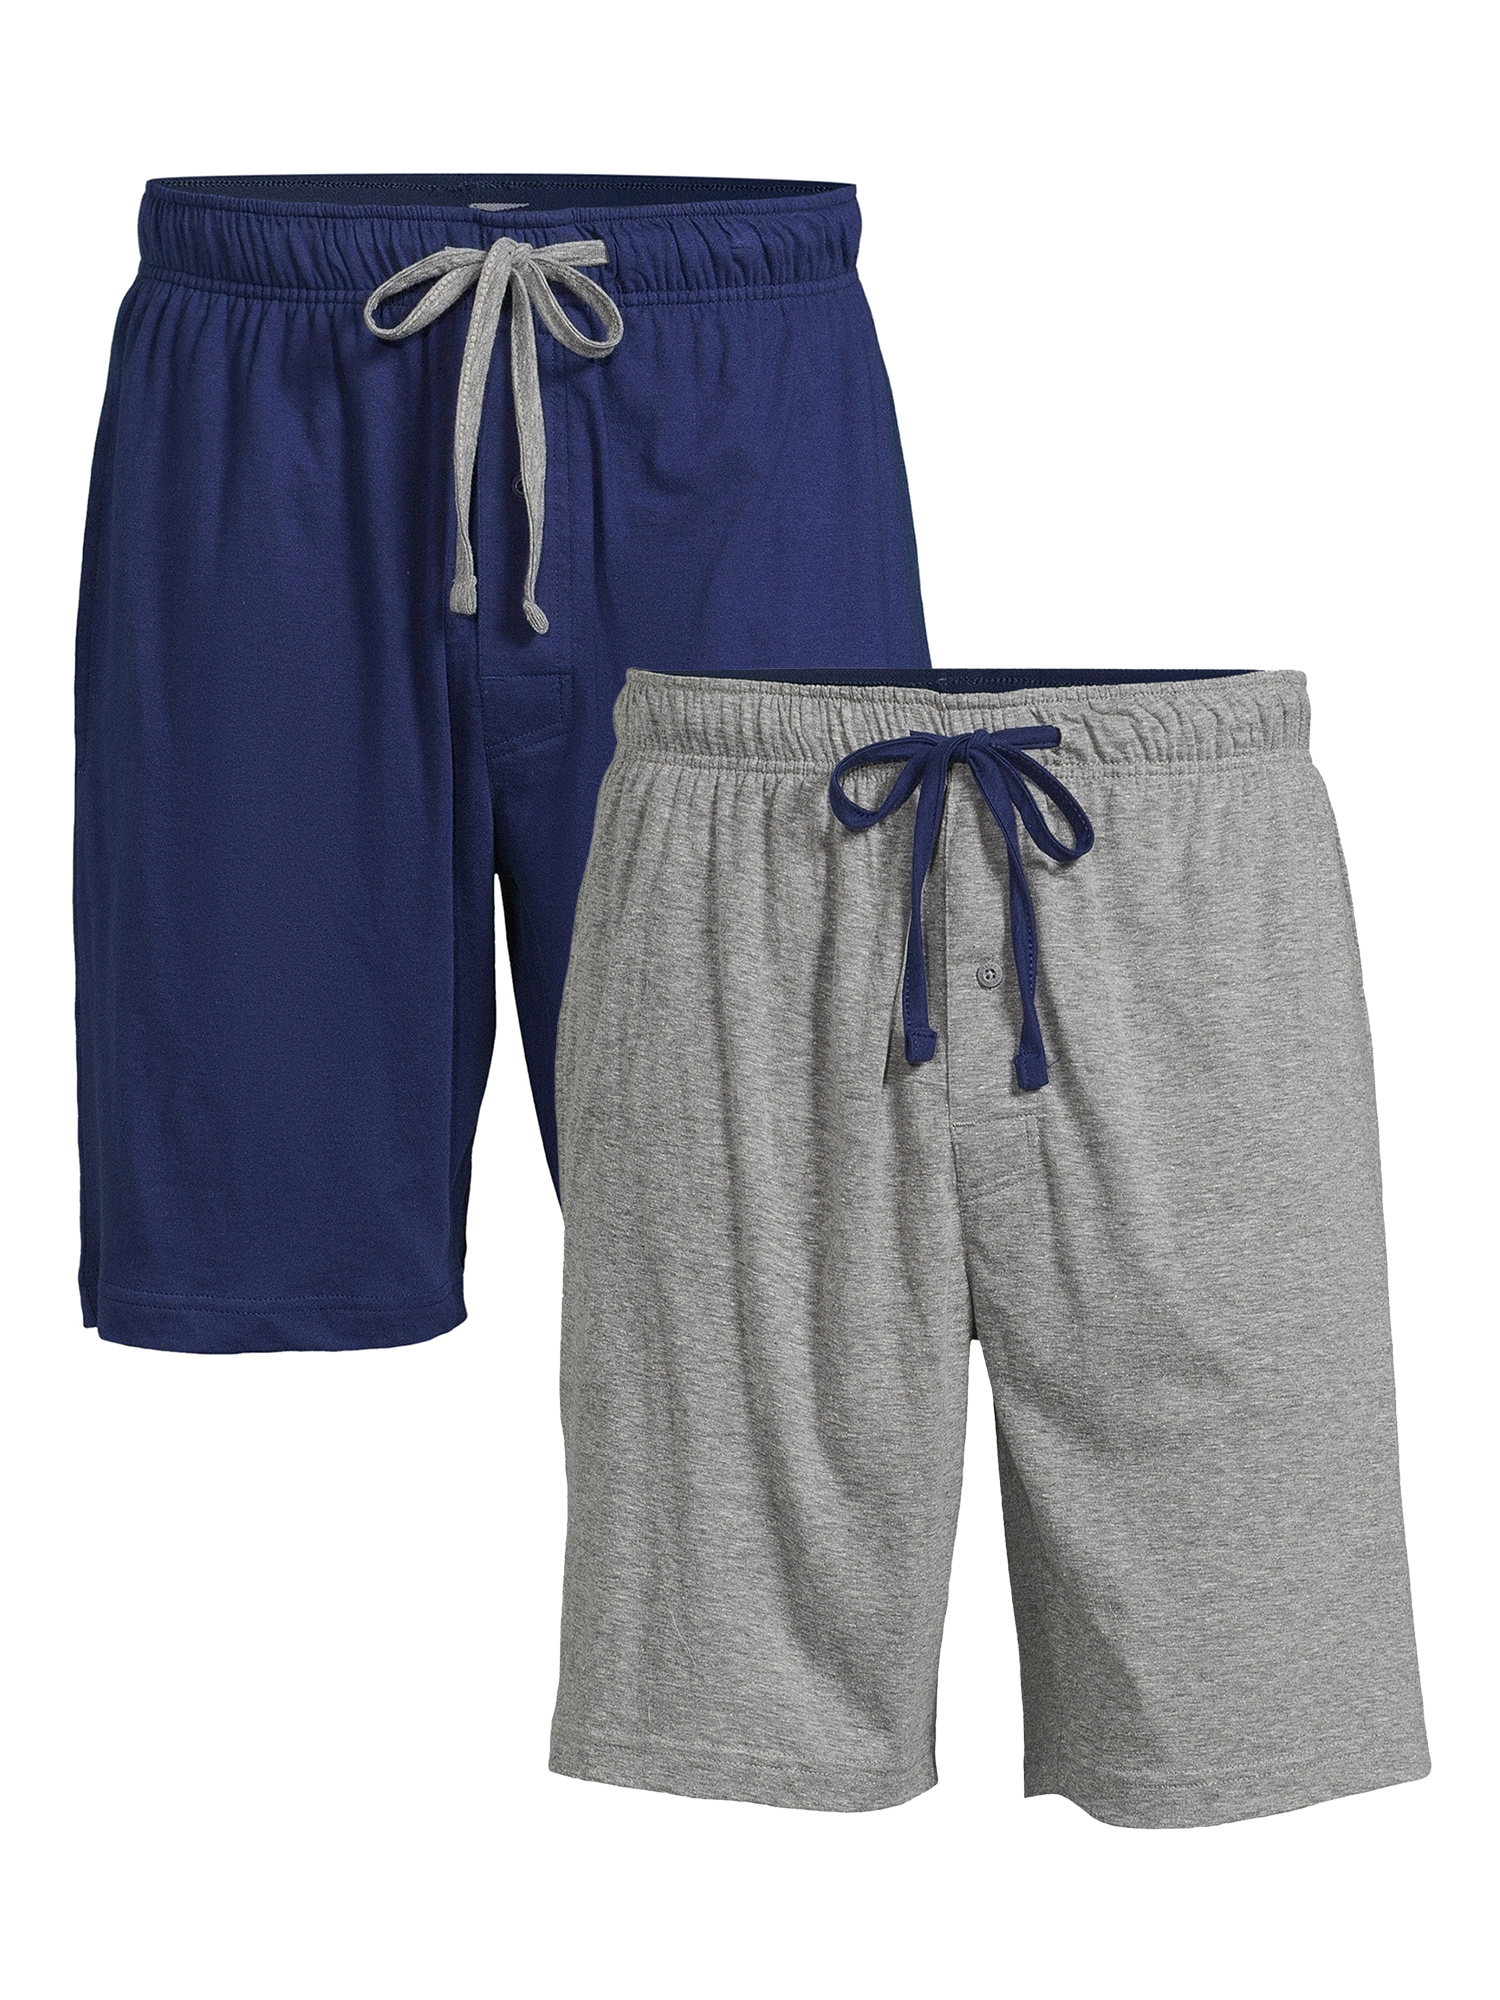 Hanes Men's and Big Men's X-temp Knit Jam Shorts, 2-Pack - image 1 of 3